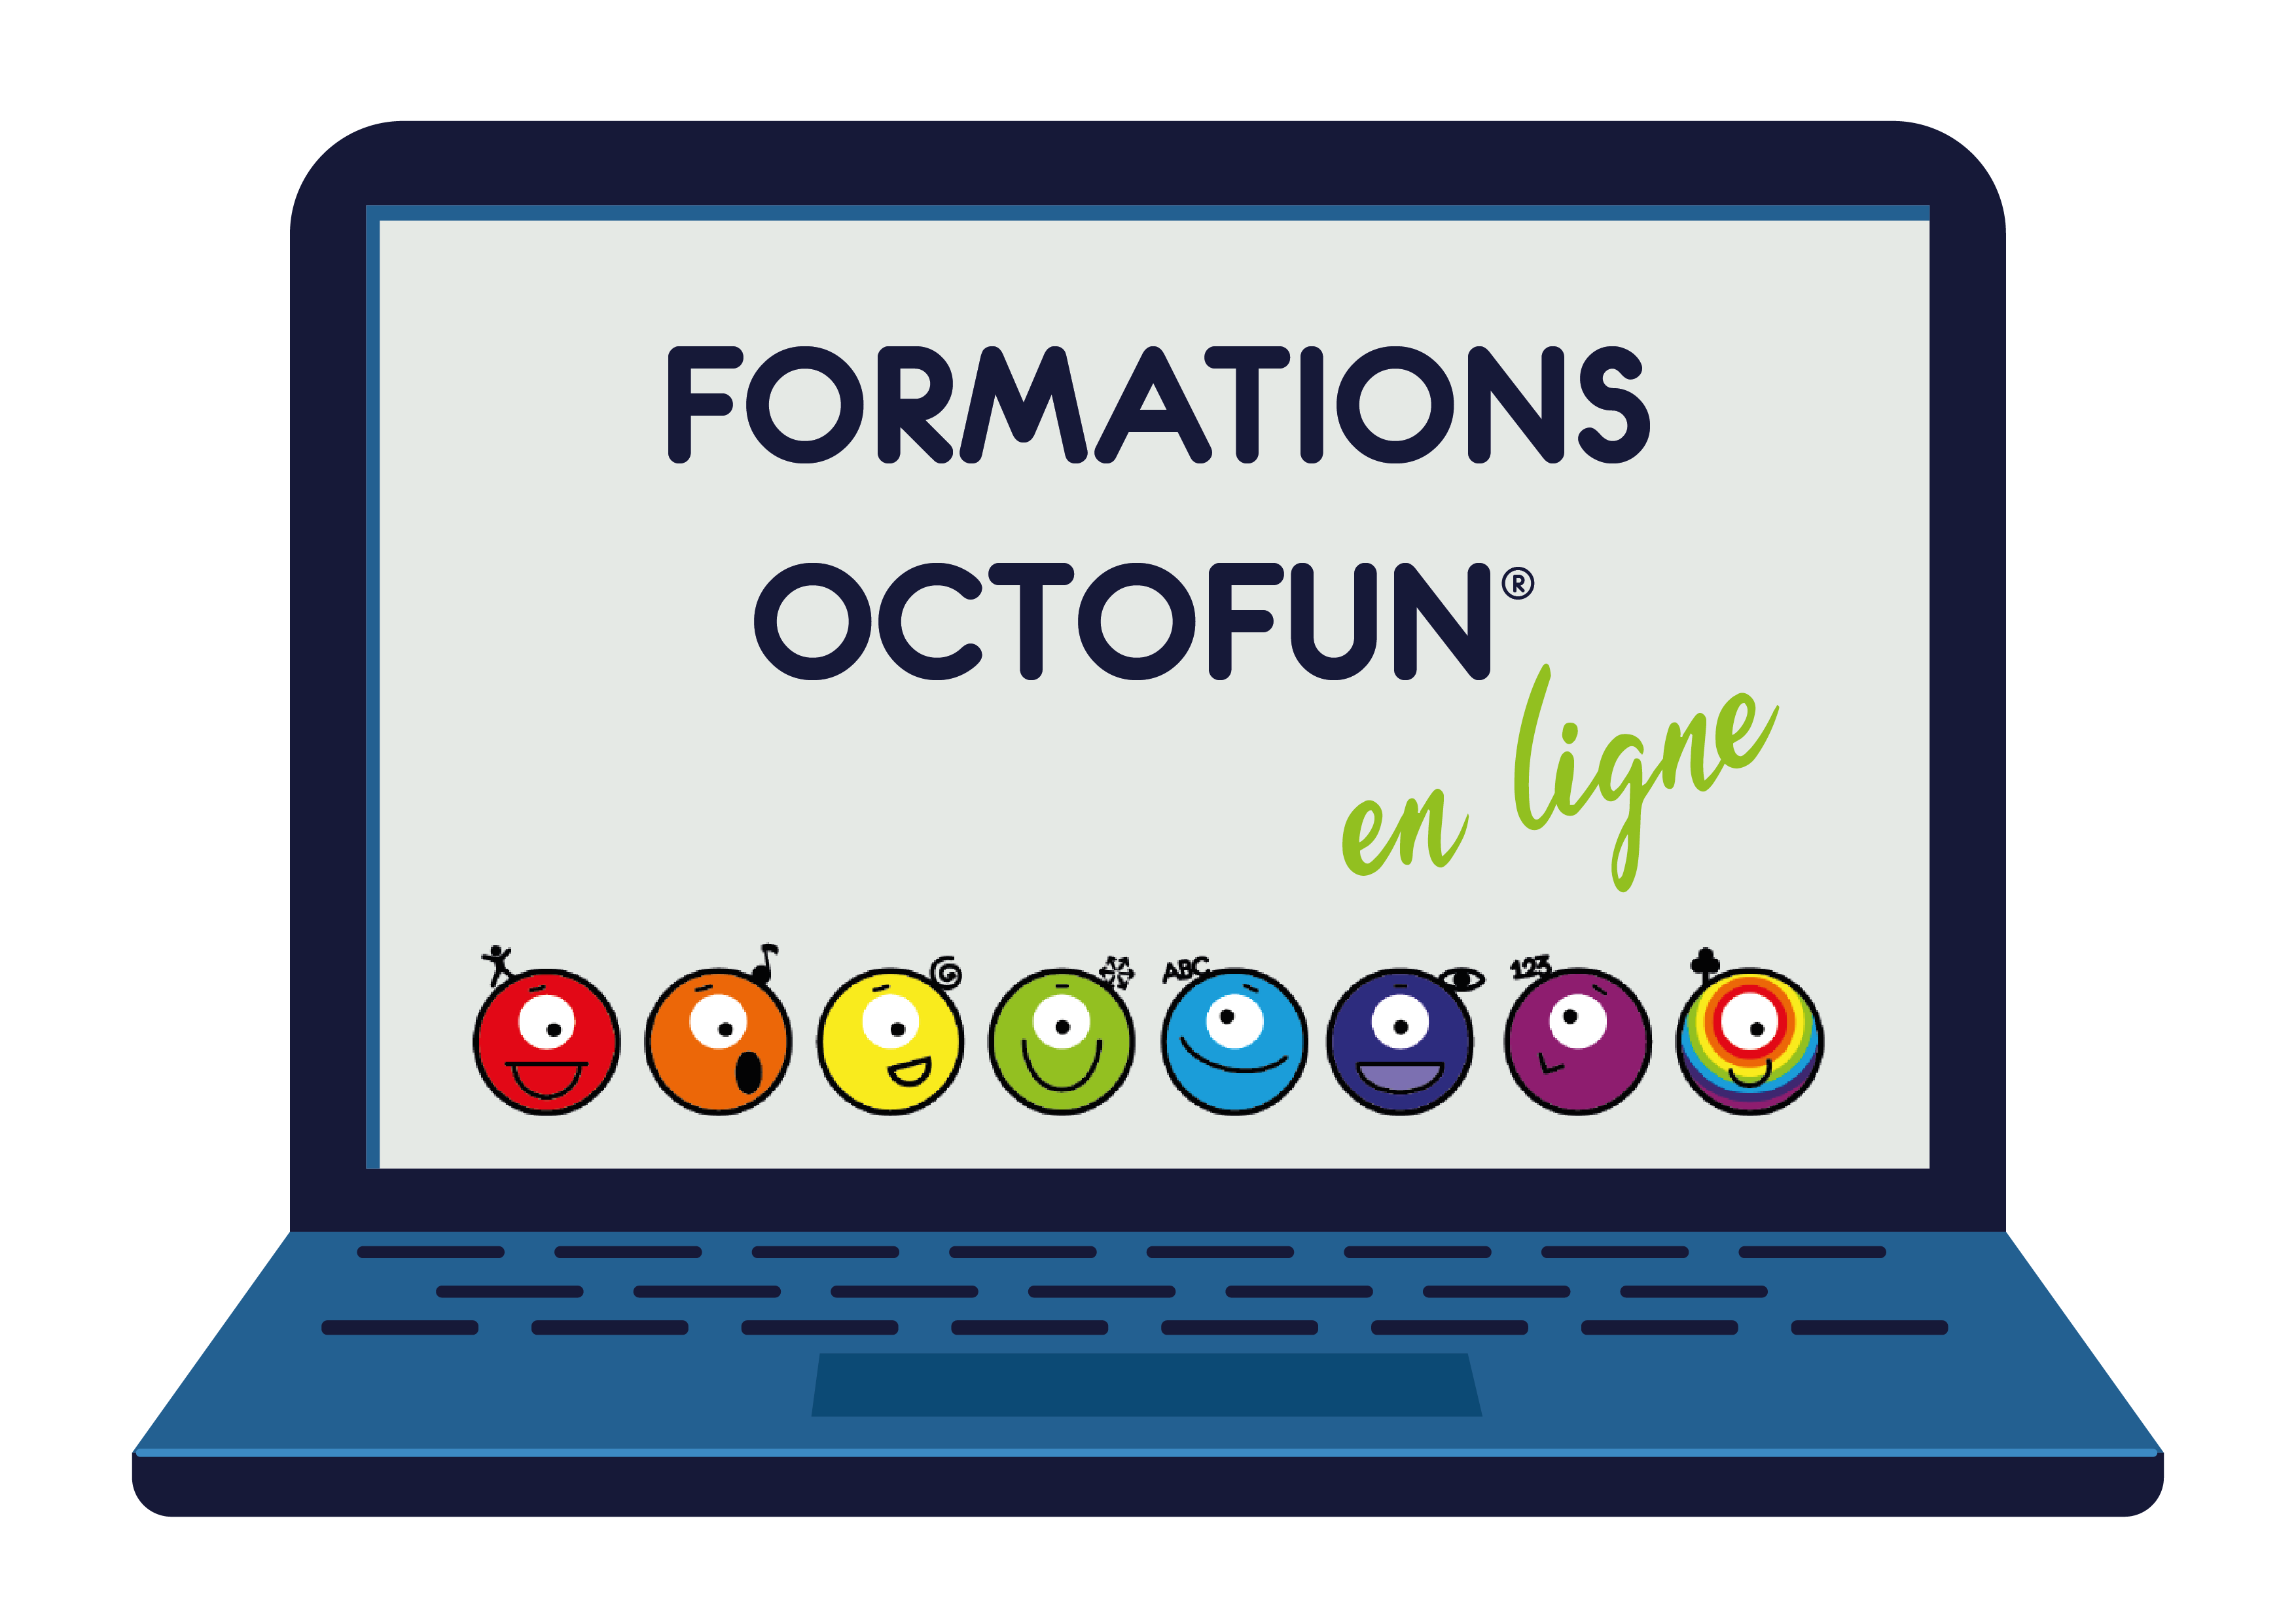 Octofun-Formations-en-ligne